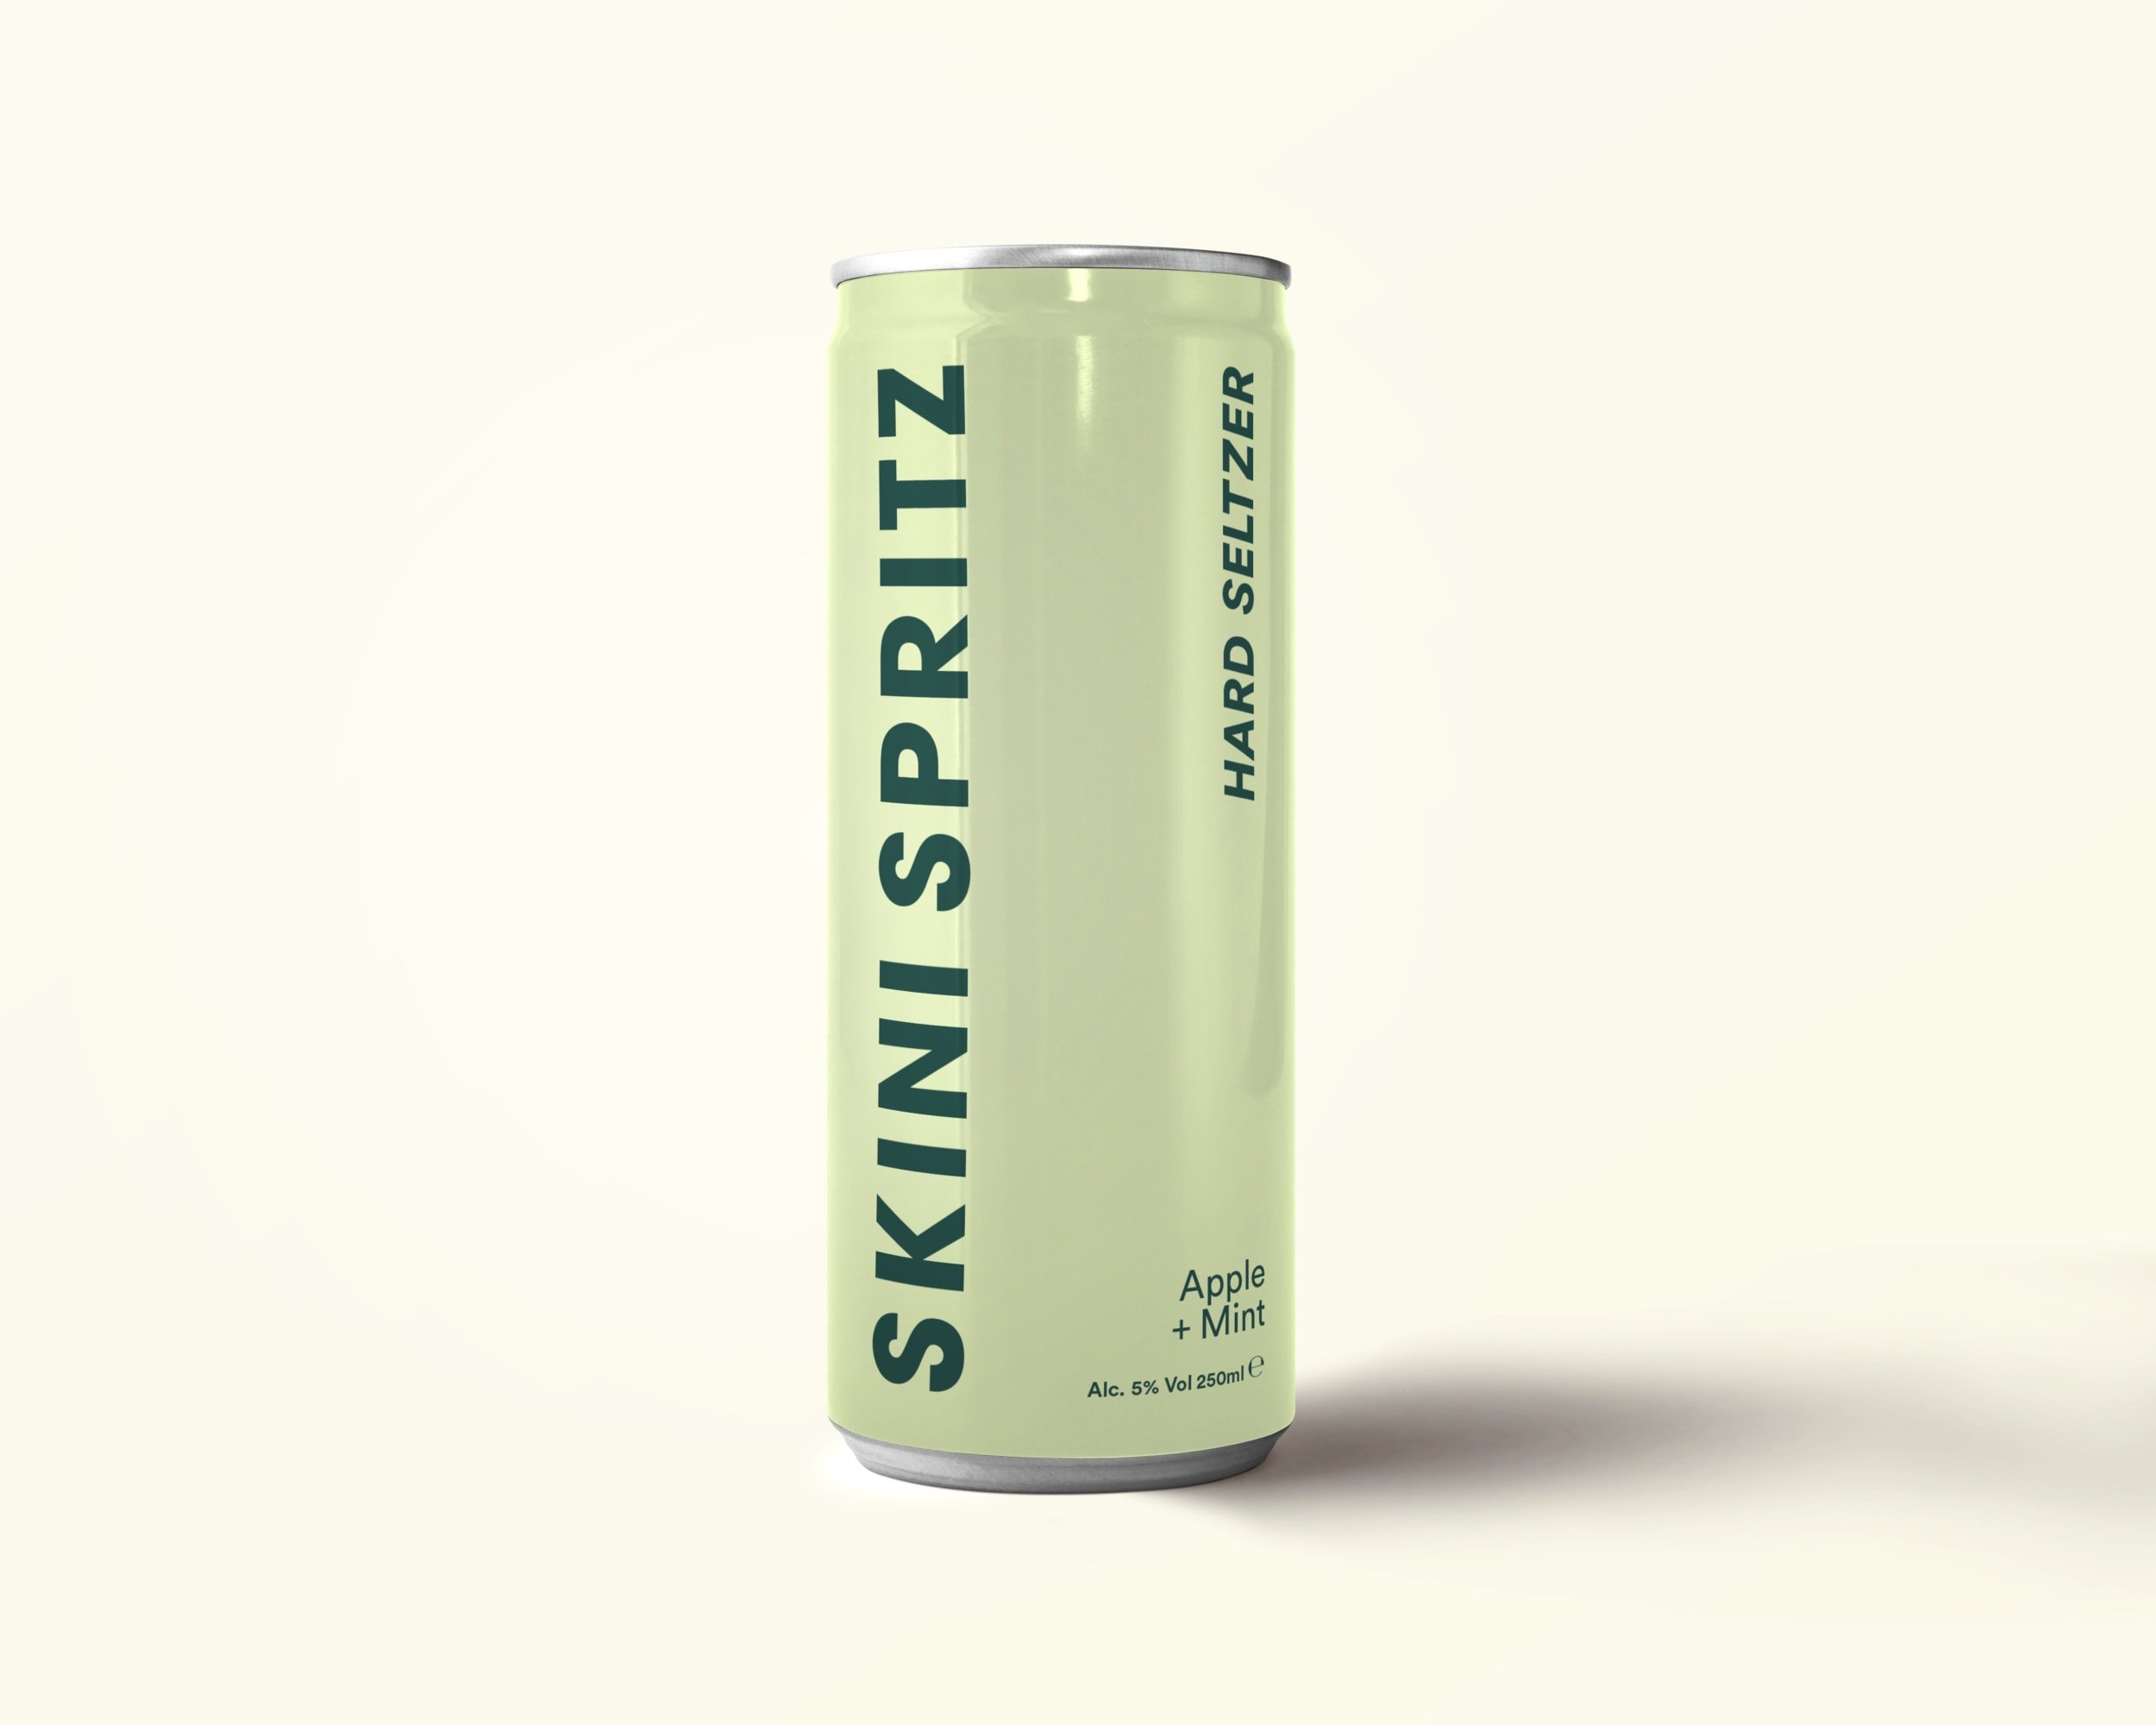 A tea green can of hard seltzer brand Skini Spritz